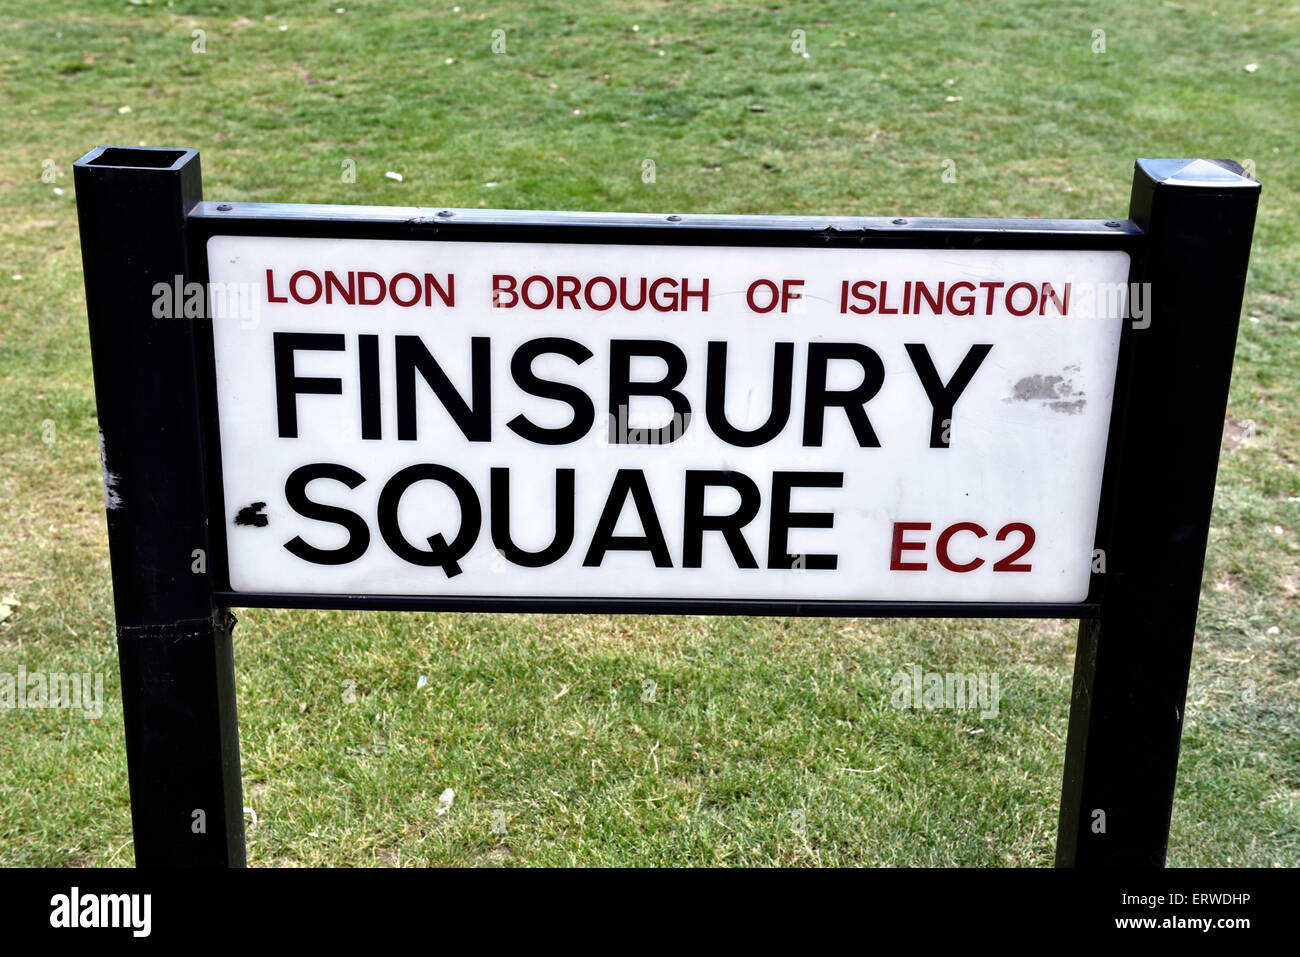 Finsbury Square Straßenschild EC2, London Borough of Islington England Großbritannien UK Stockfoto